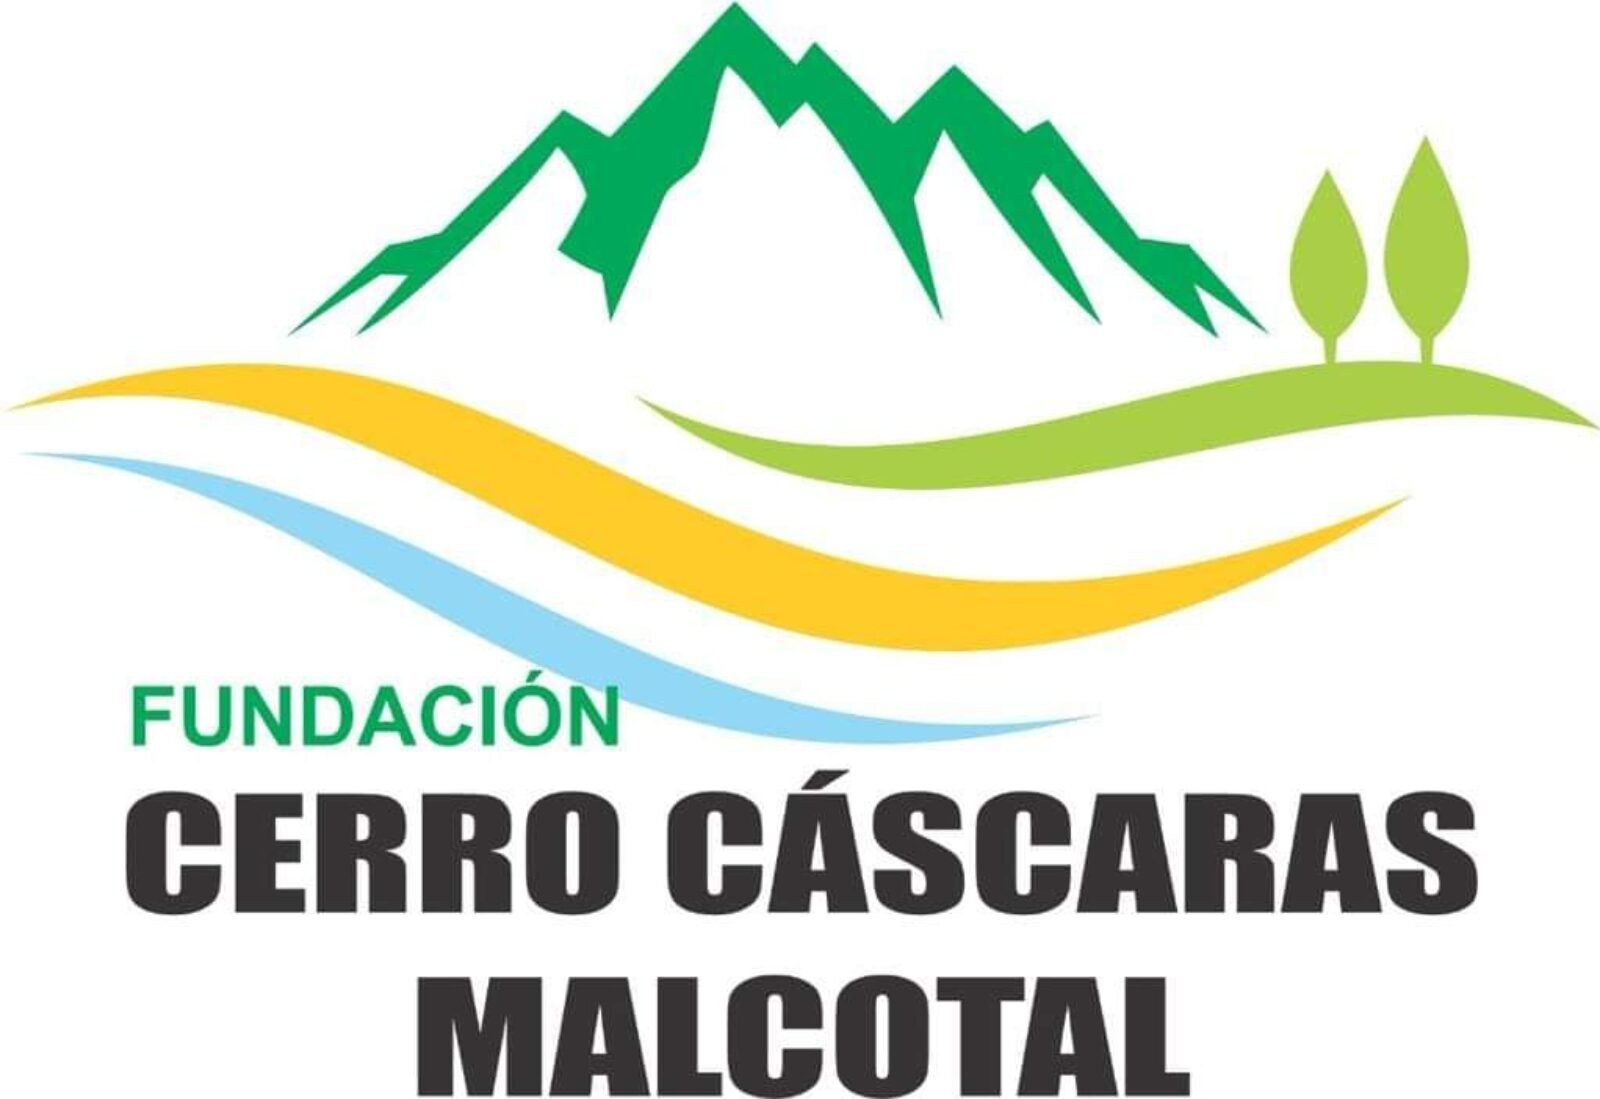 Fundación Cerro Cascaras Malcotal